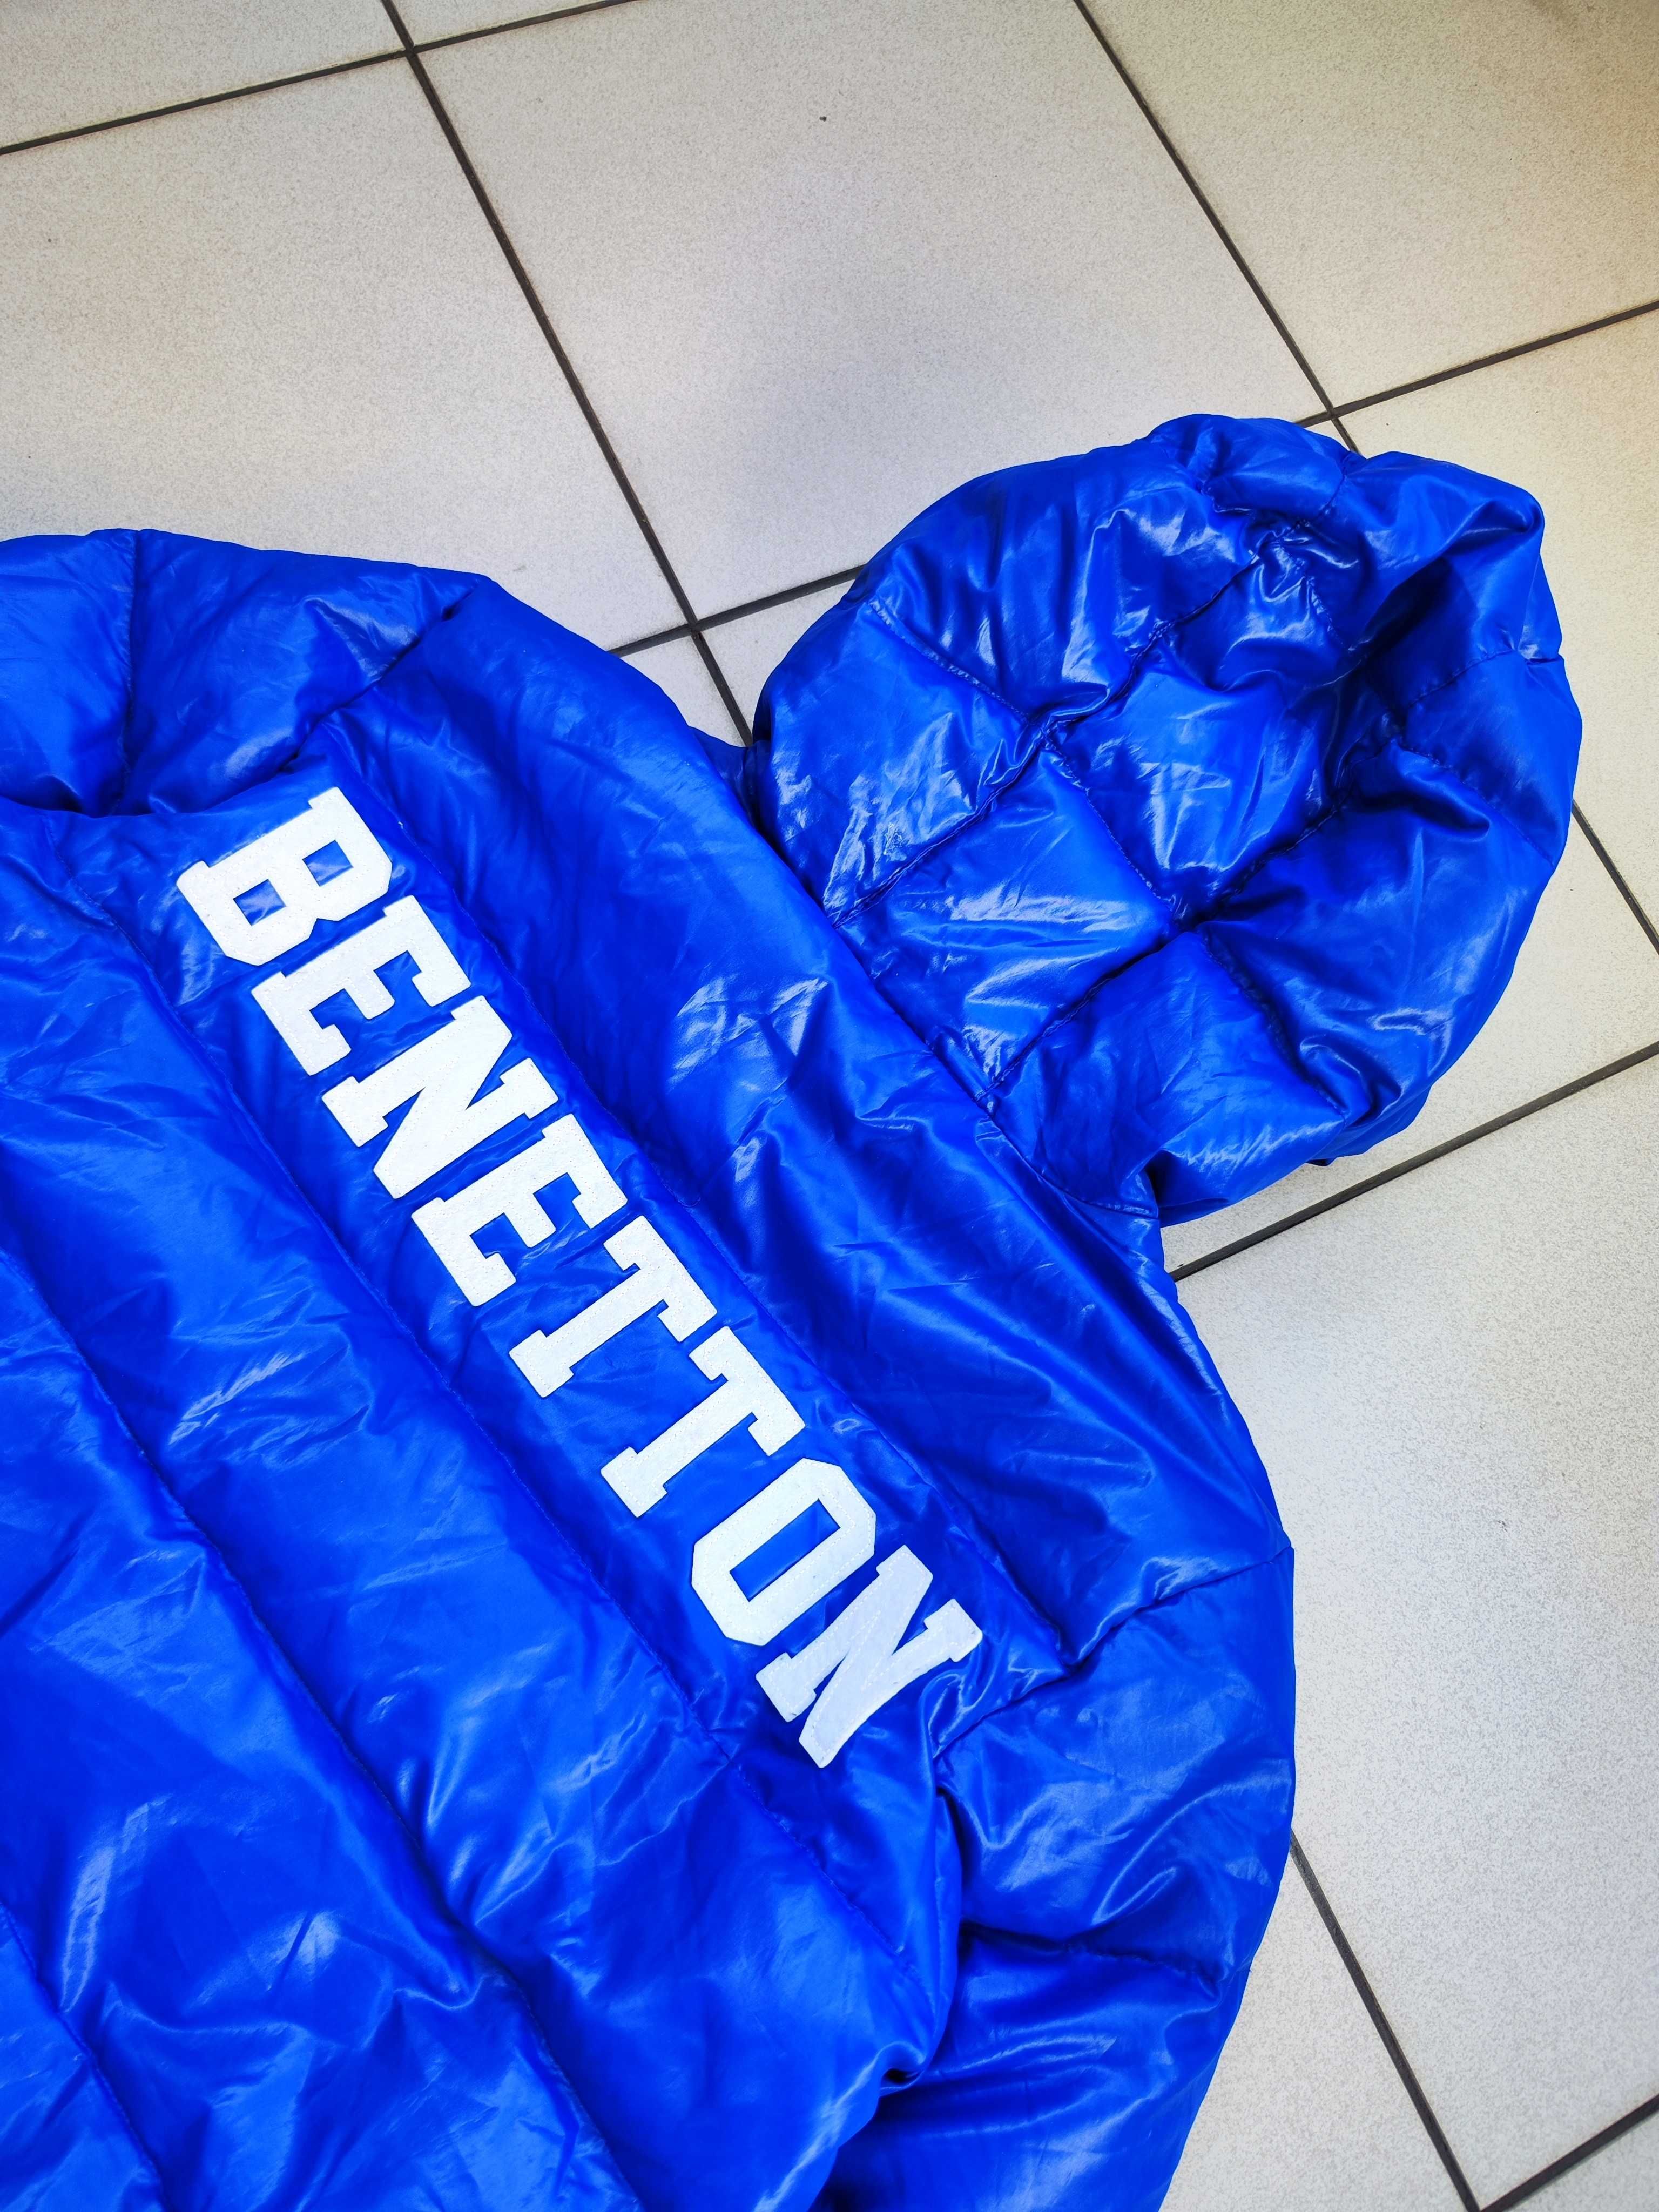 Kurtka zimowa Benetton puchowa damska niebieska r. M